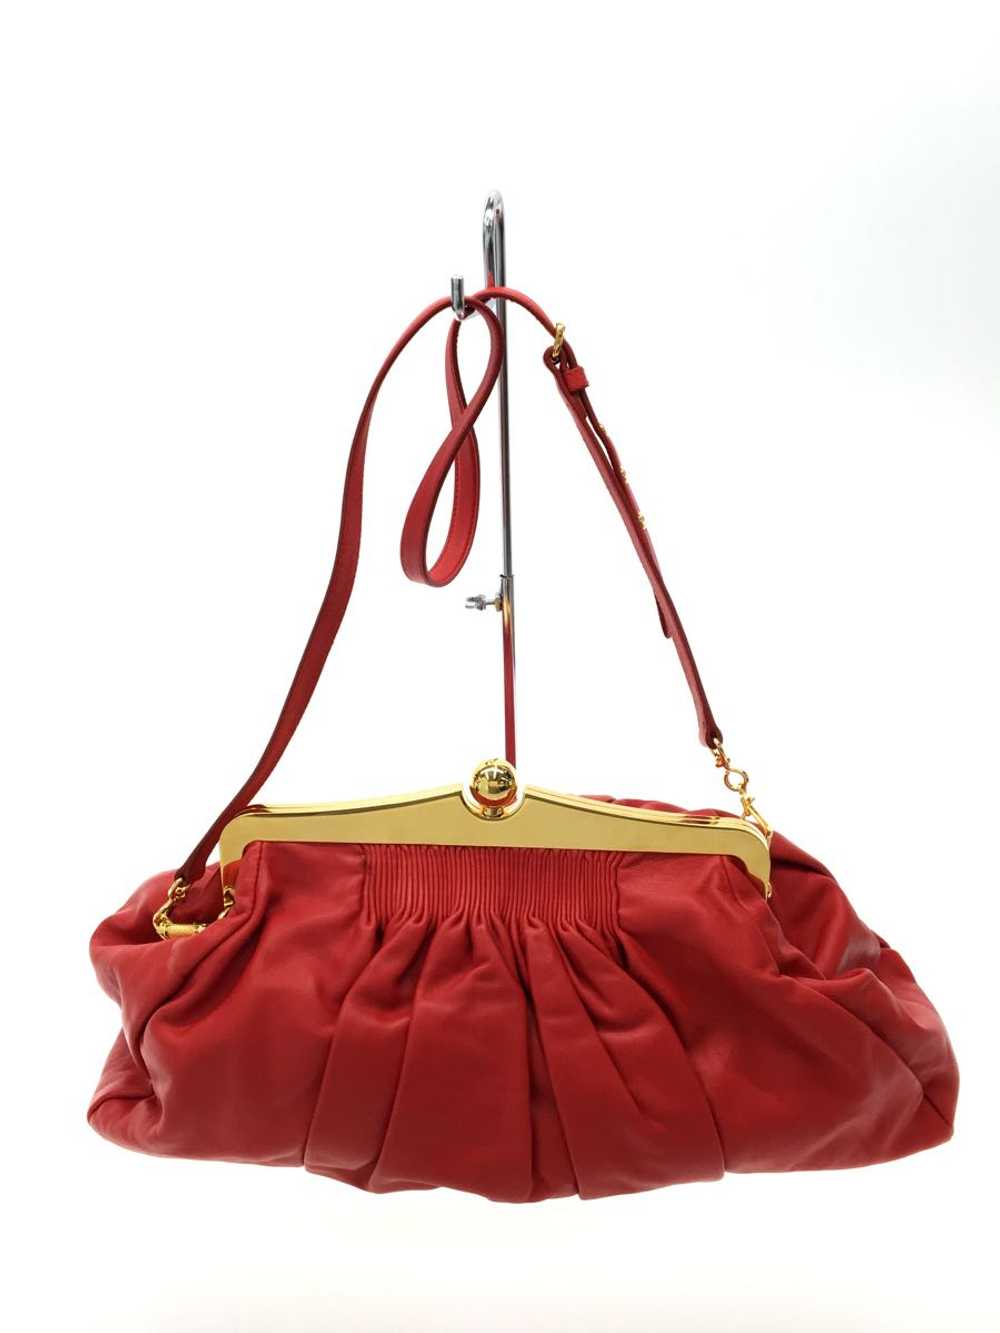 MIUMIU Purse/2Way Shoulder Bag/Leather/Red Bag - image 3